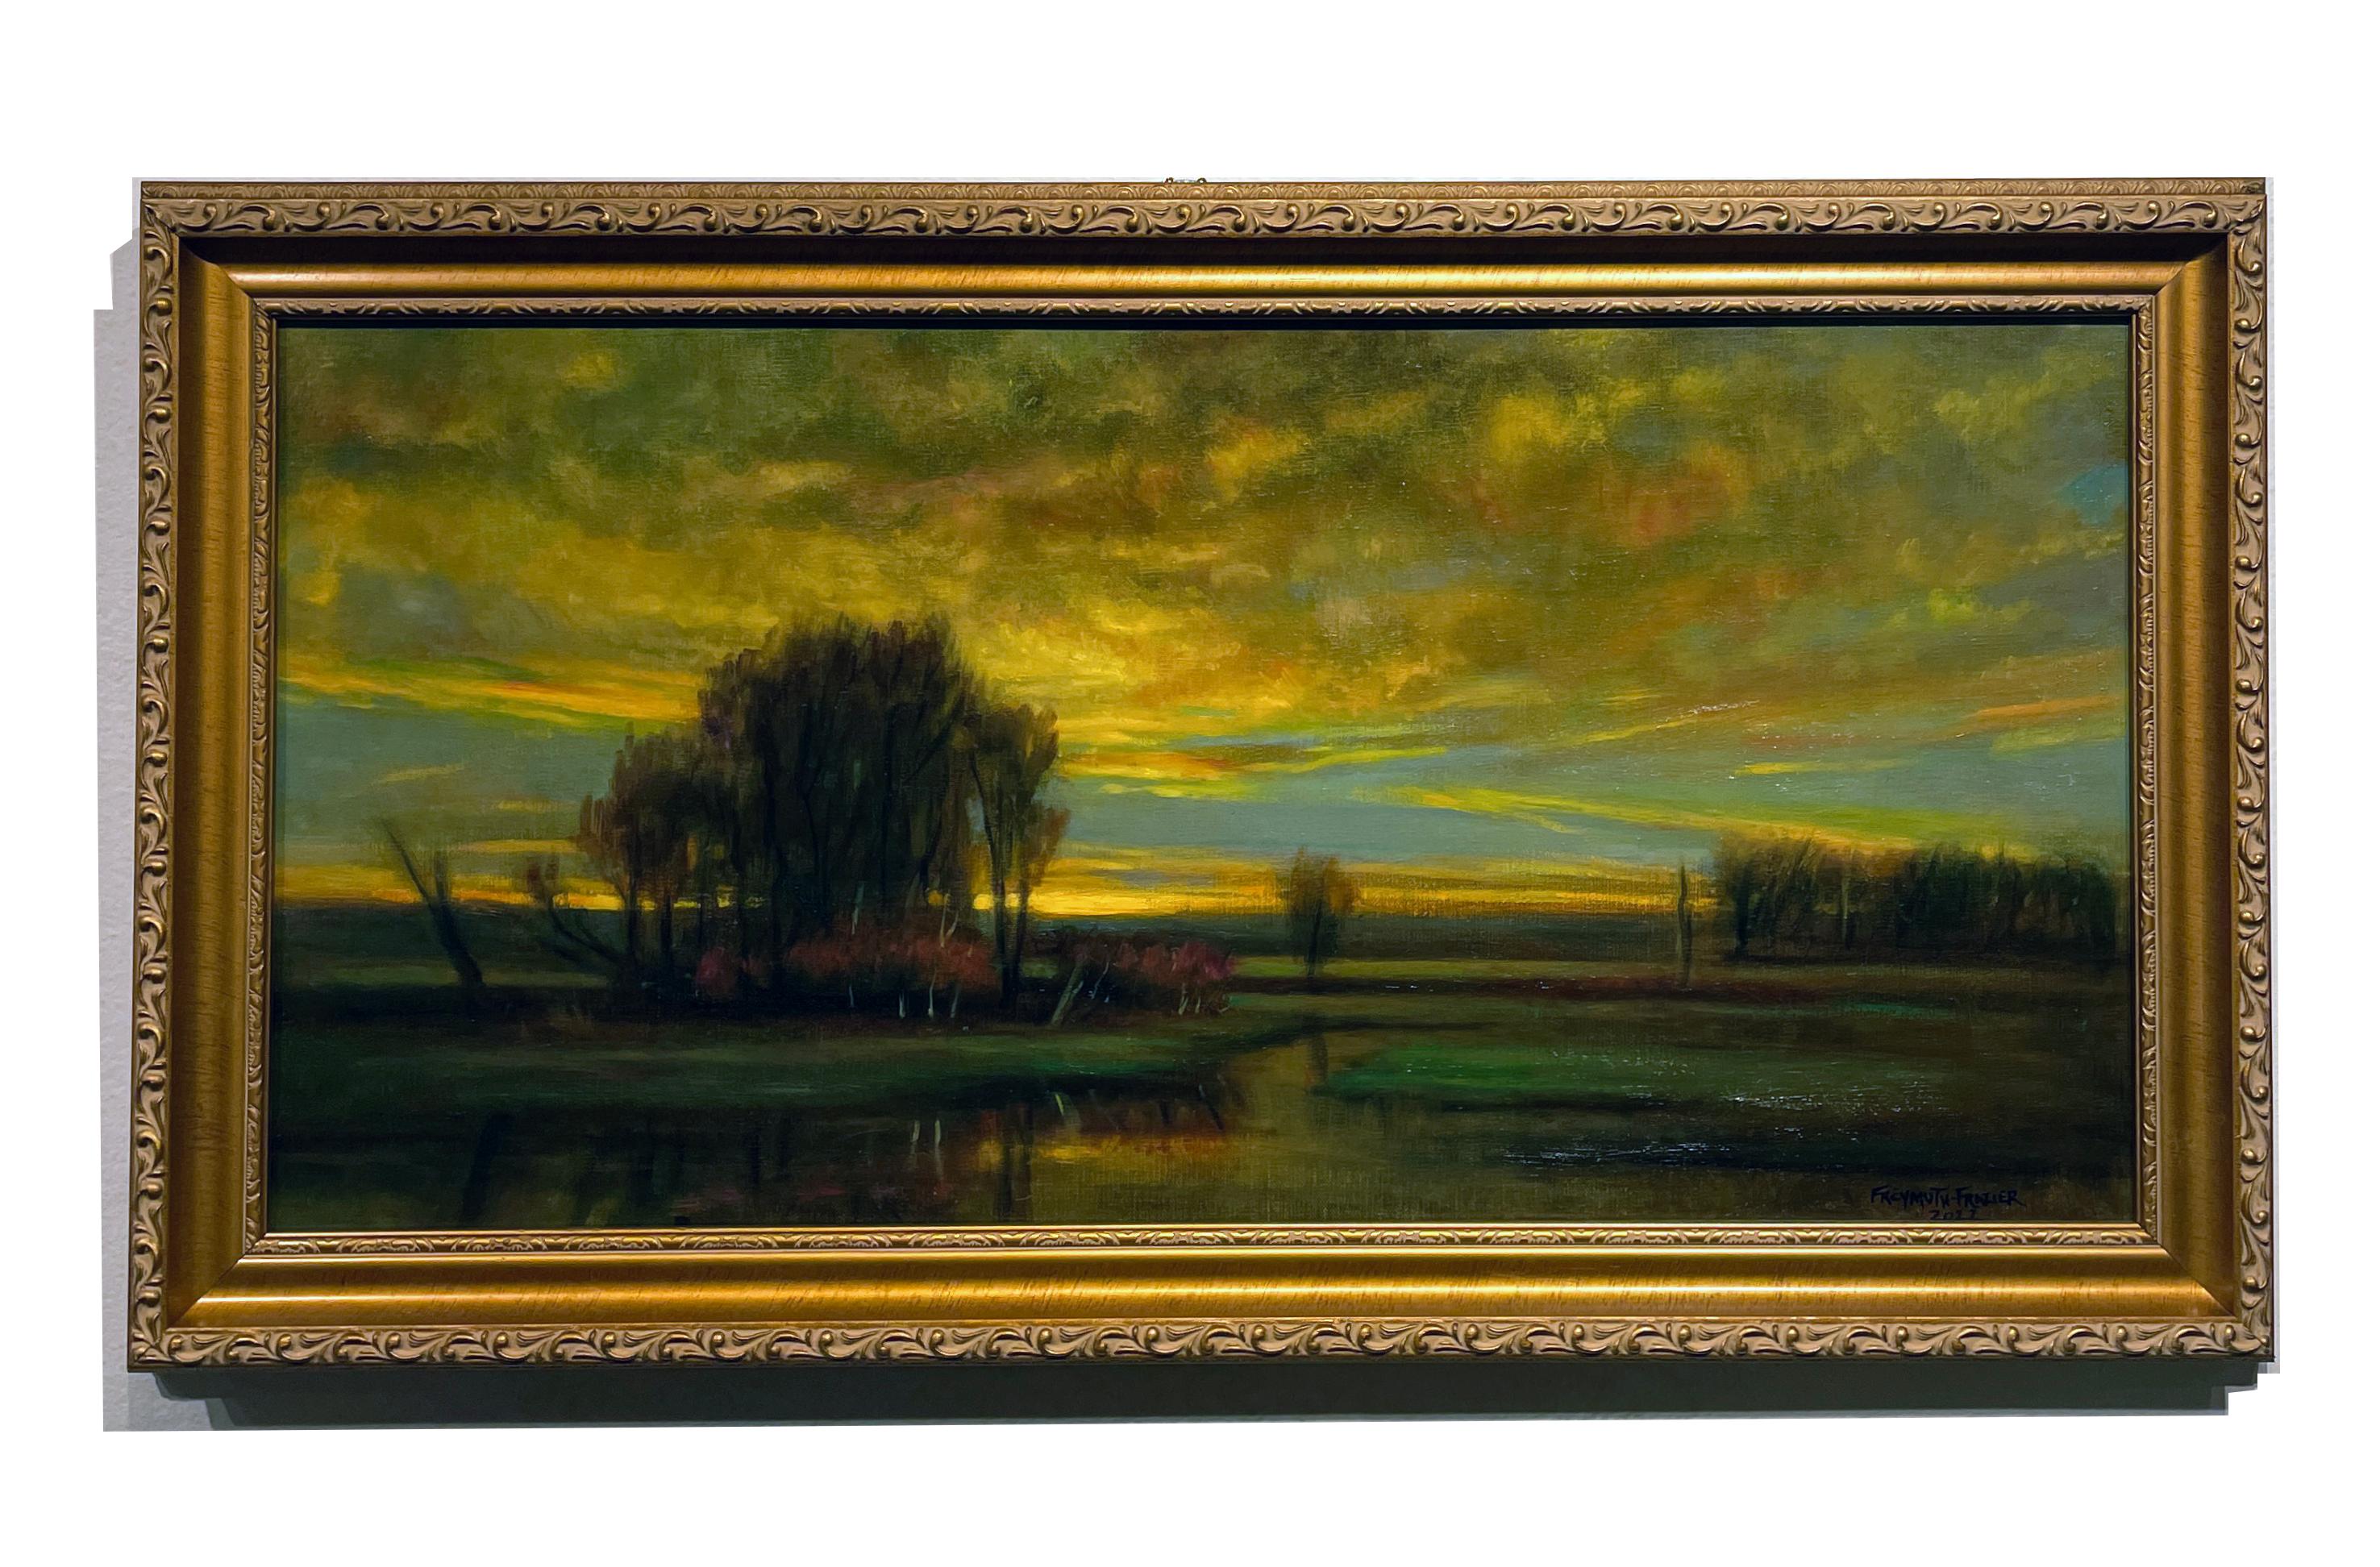 Sunburst, Rising Sun - Reflective Golden Clouds, Marshy Landscape, Original Oil  - Painting by Rose Freymuth-Frazier